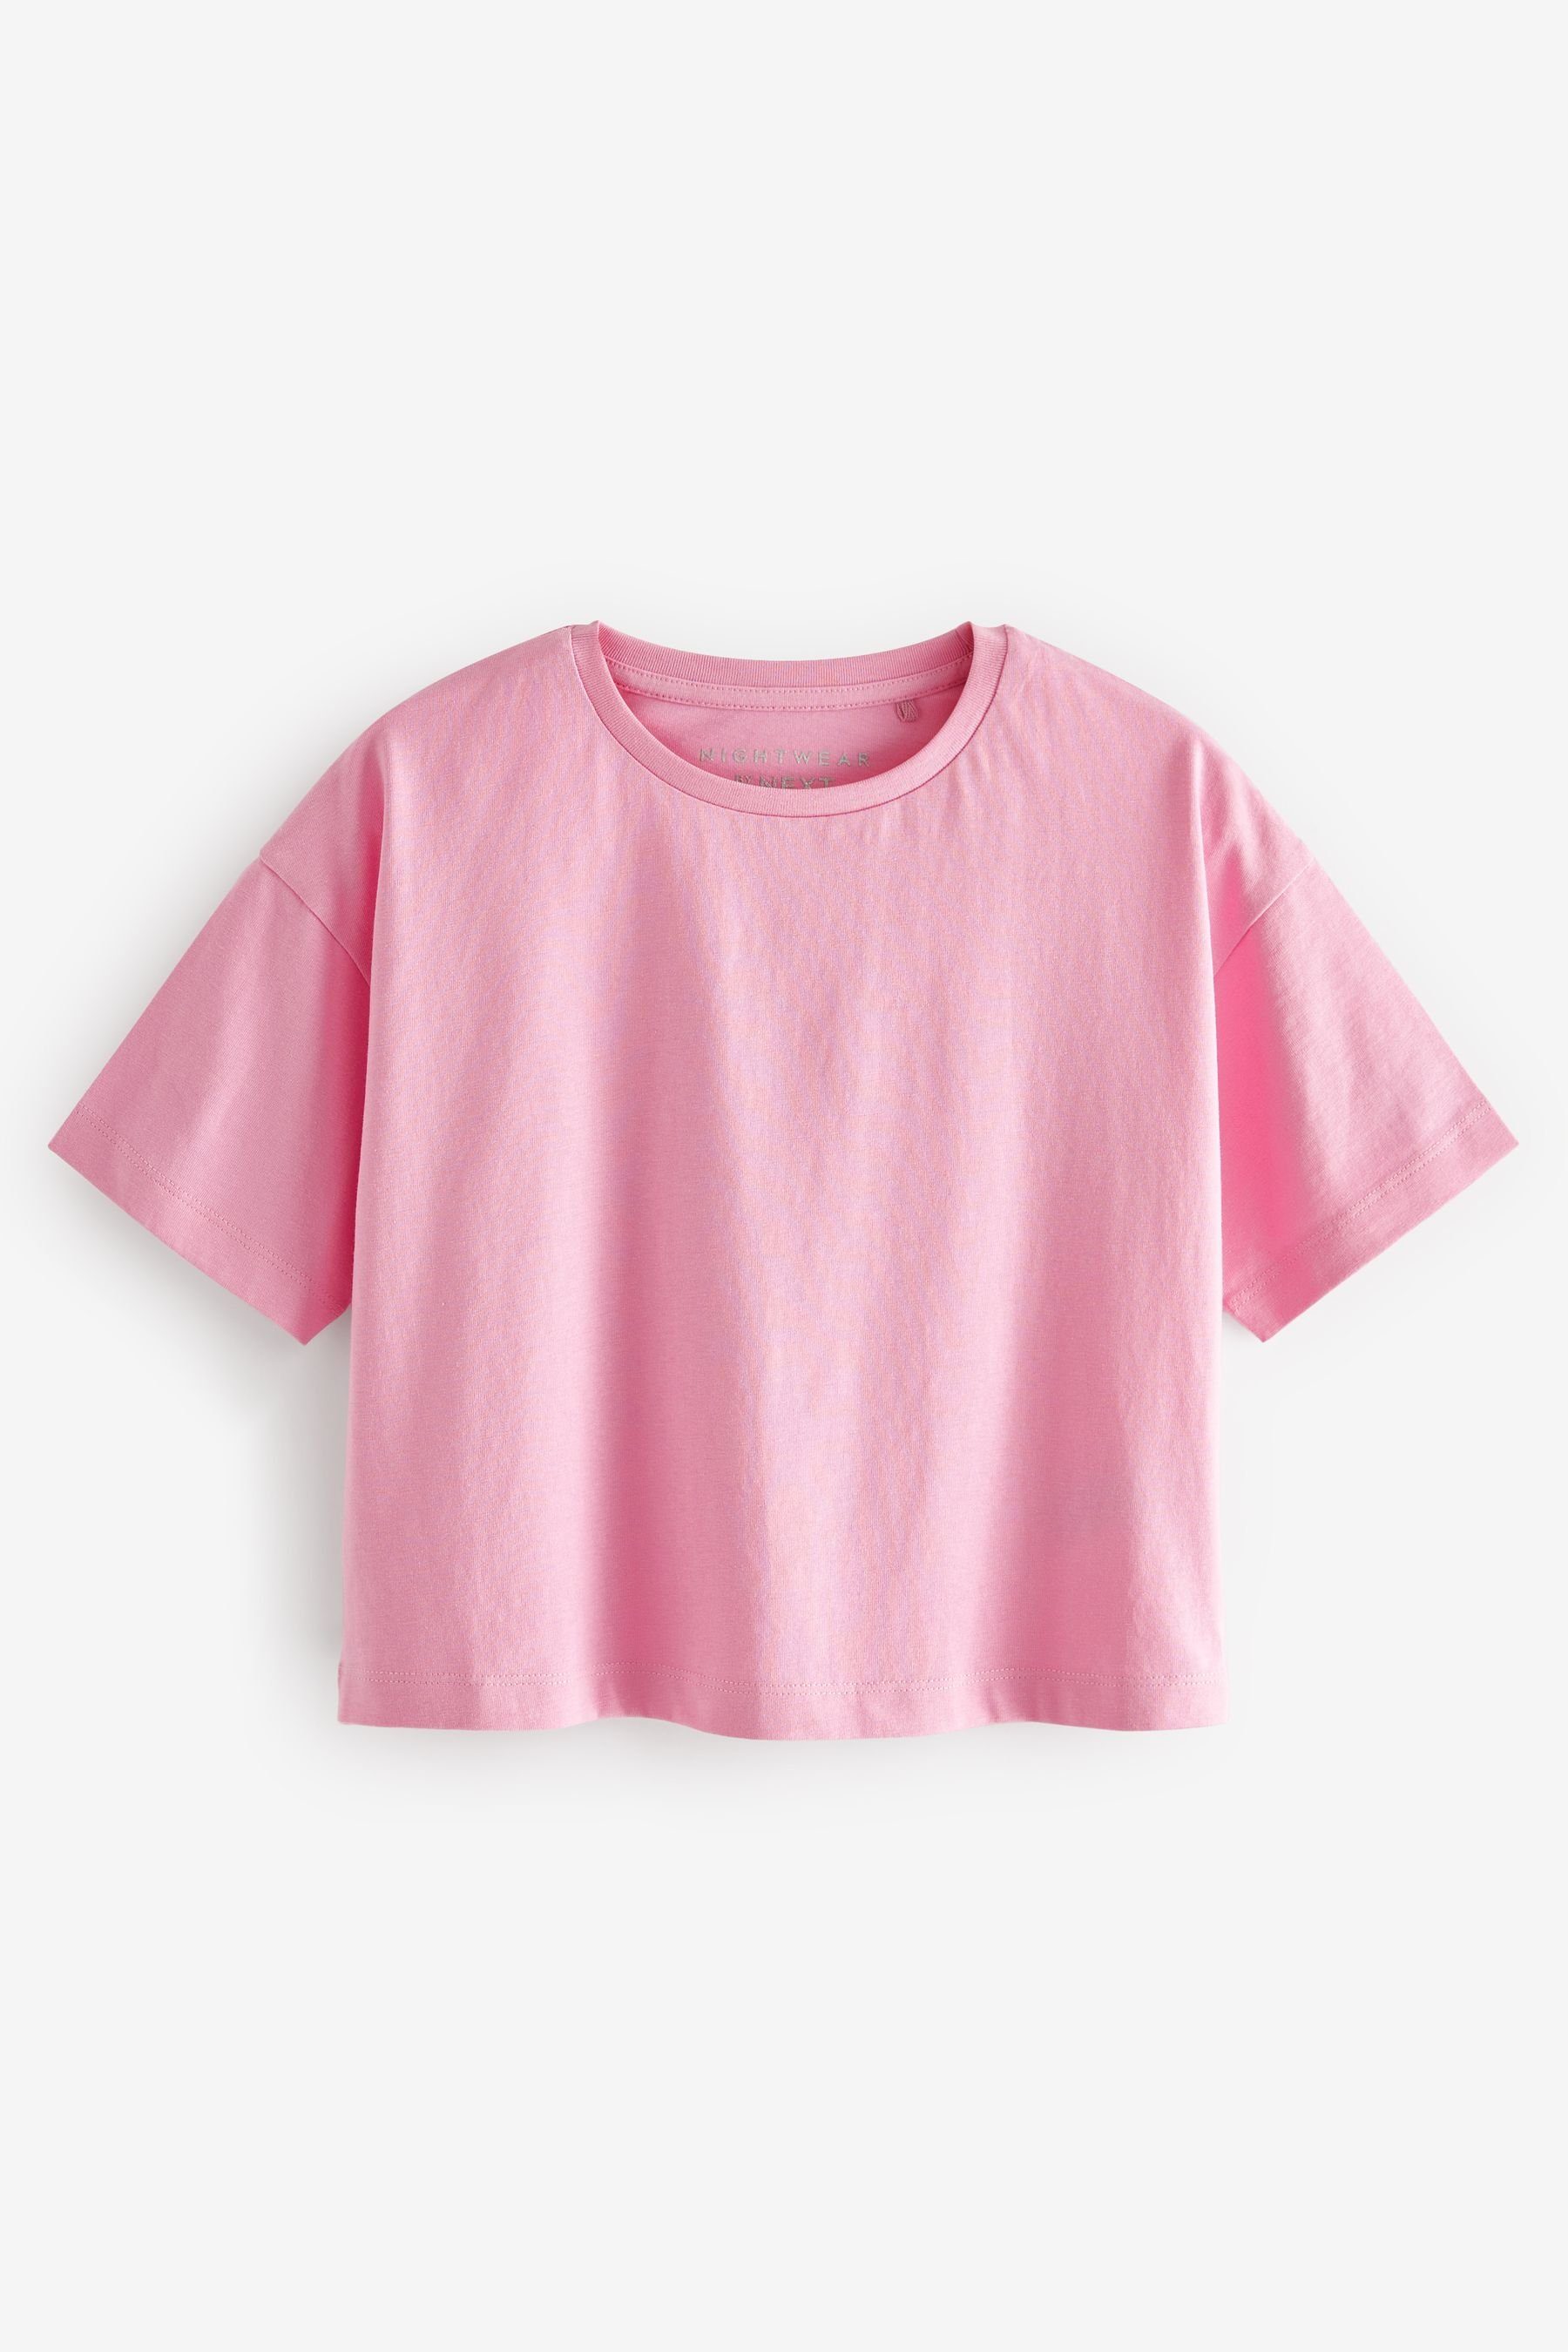 Next Pyjama 2er-Pack Navy/Pink Heart Schlafanzüge tlg) Daisy (4